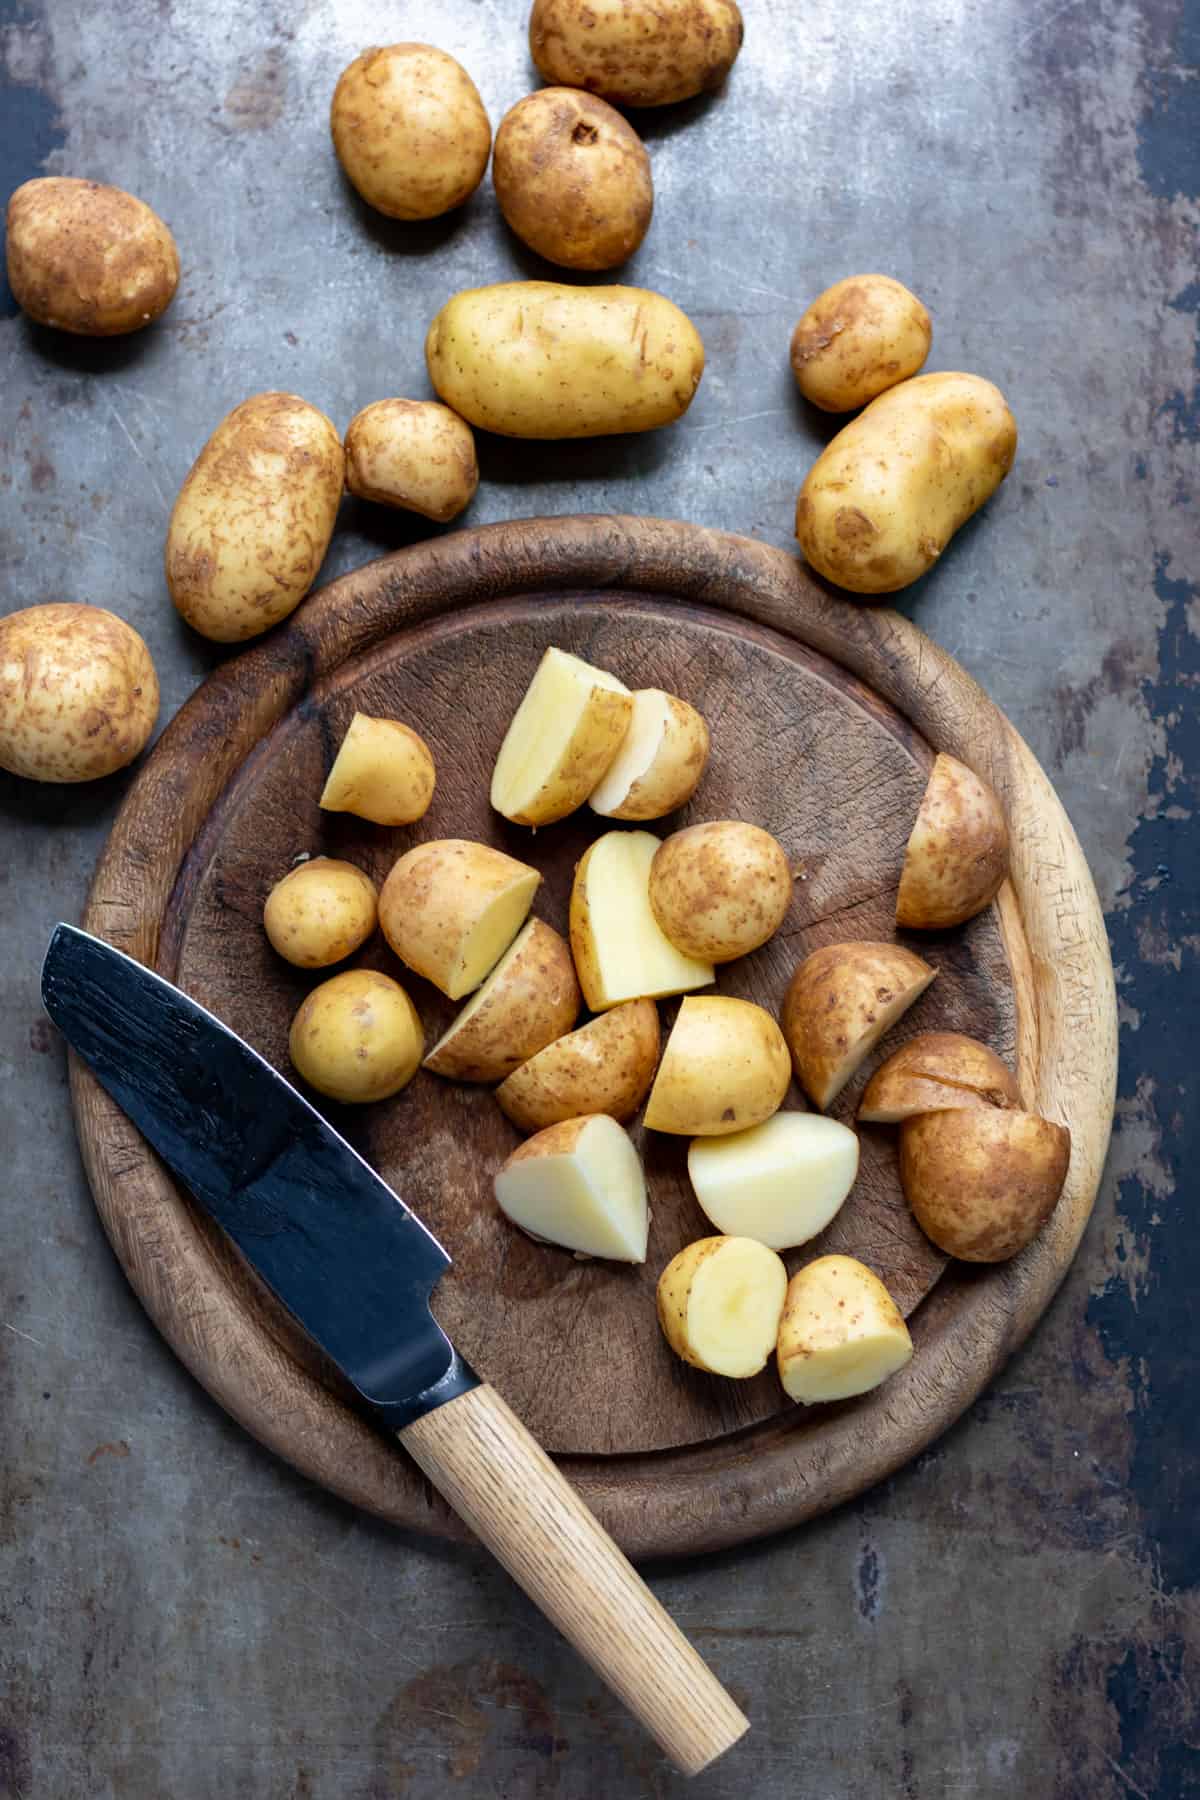 Prepping potatoes.